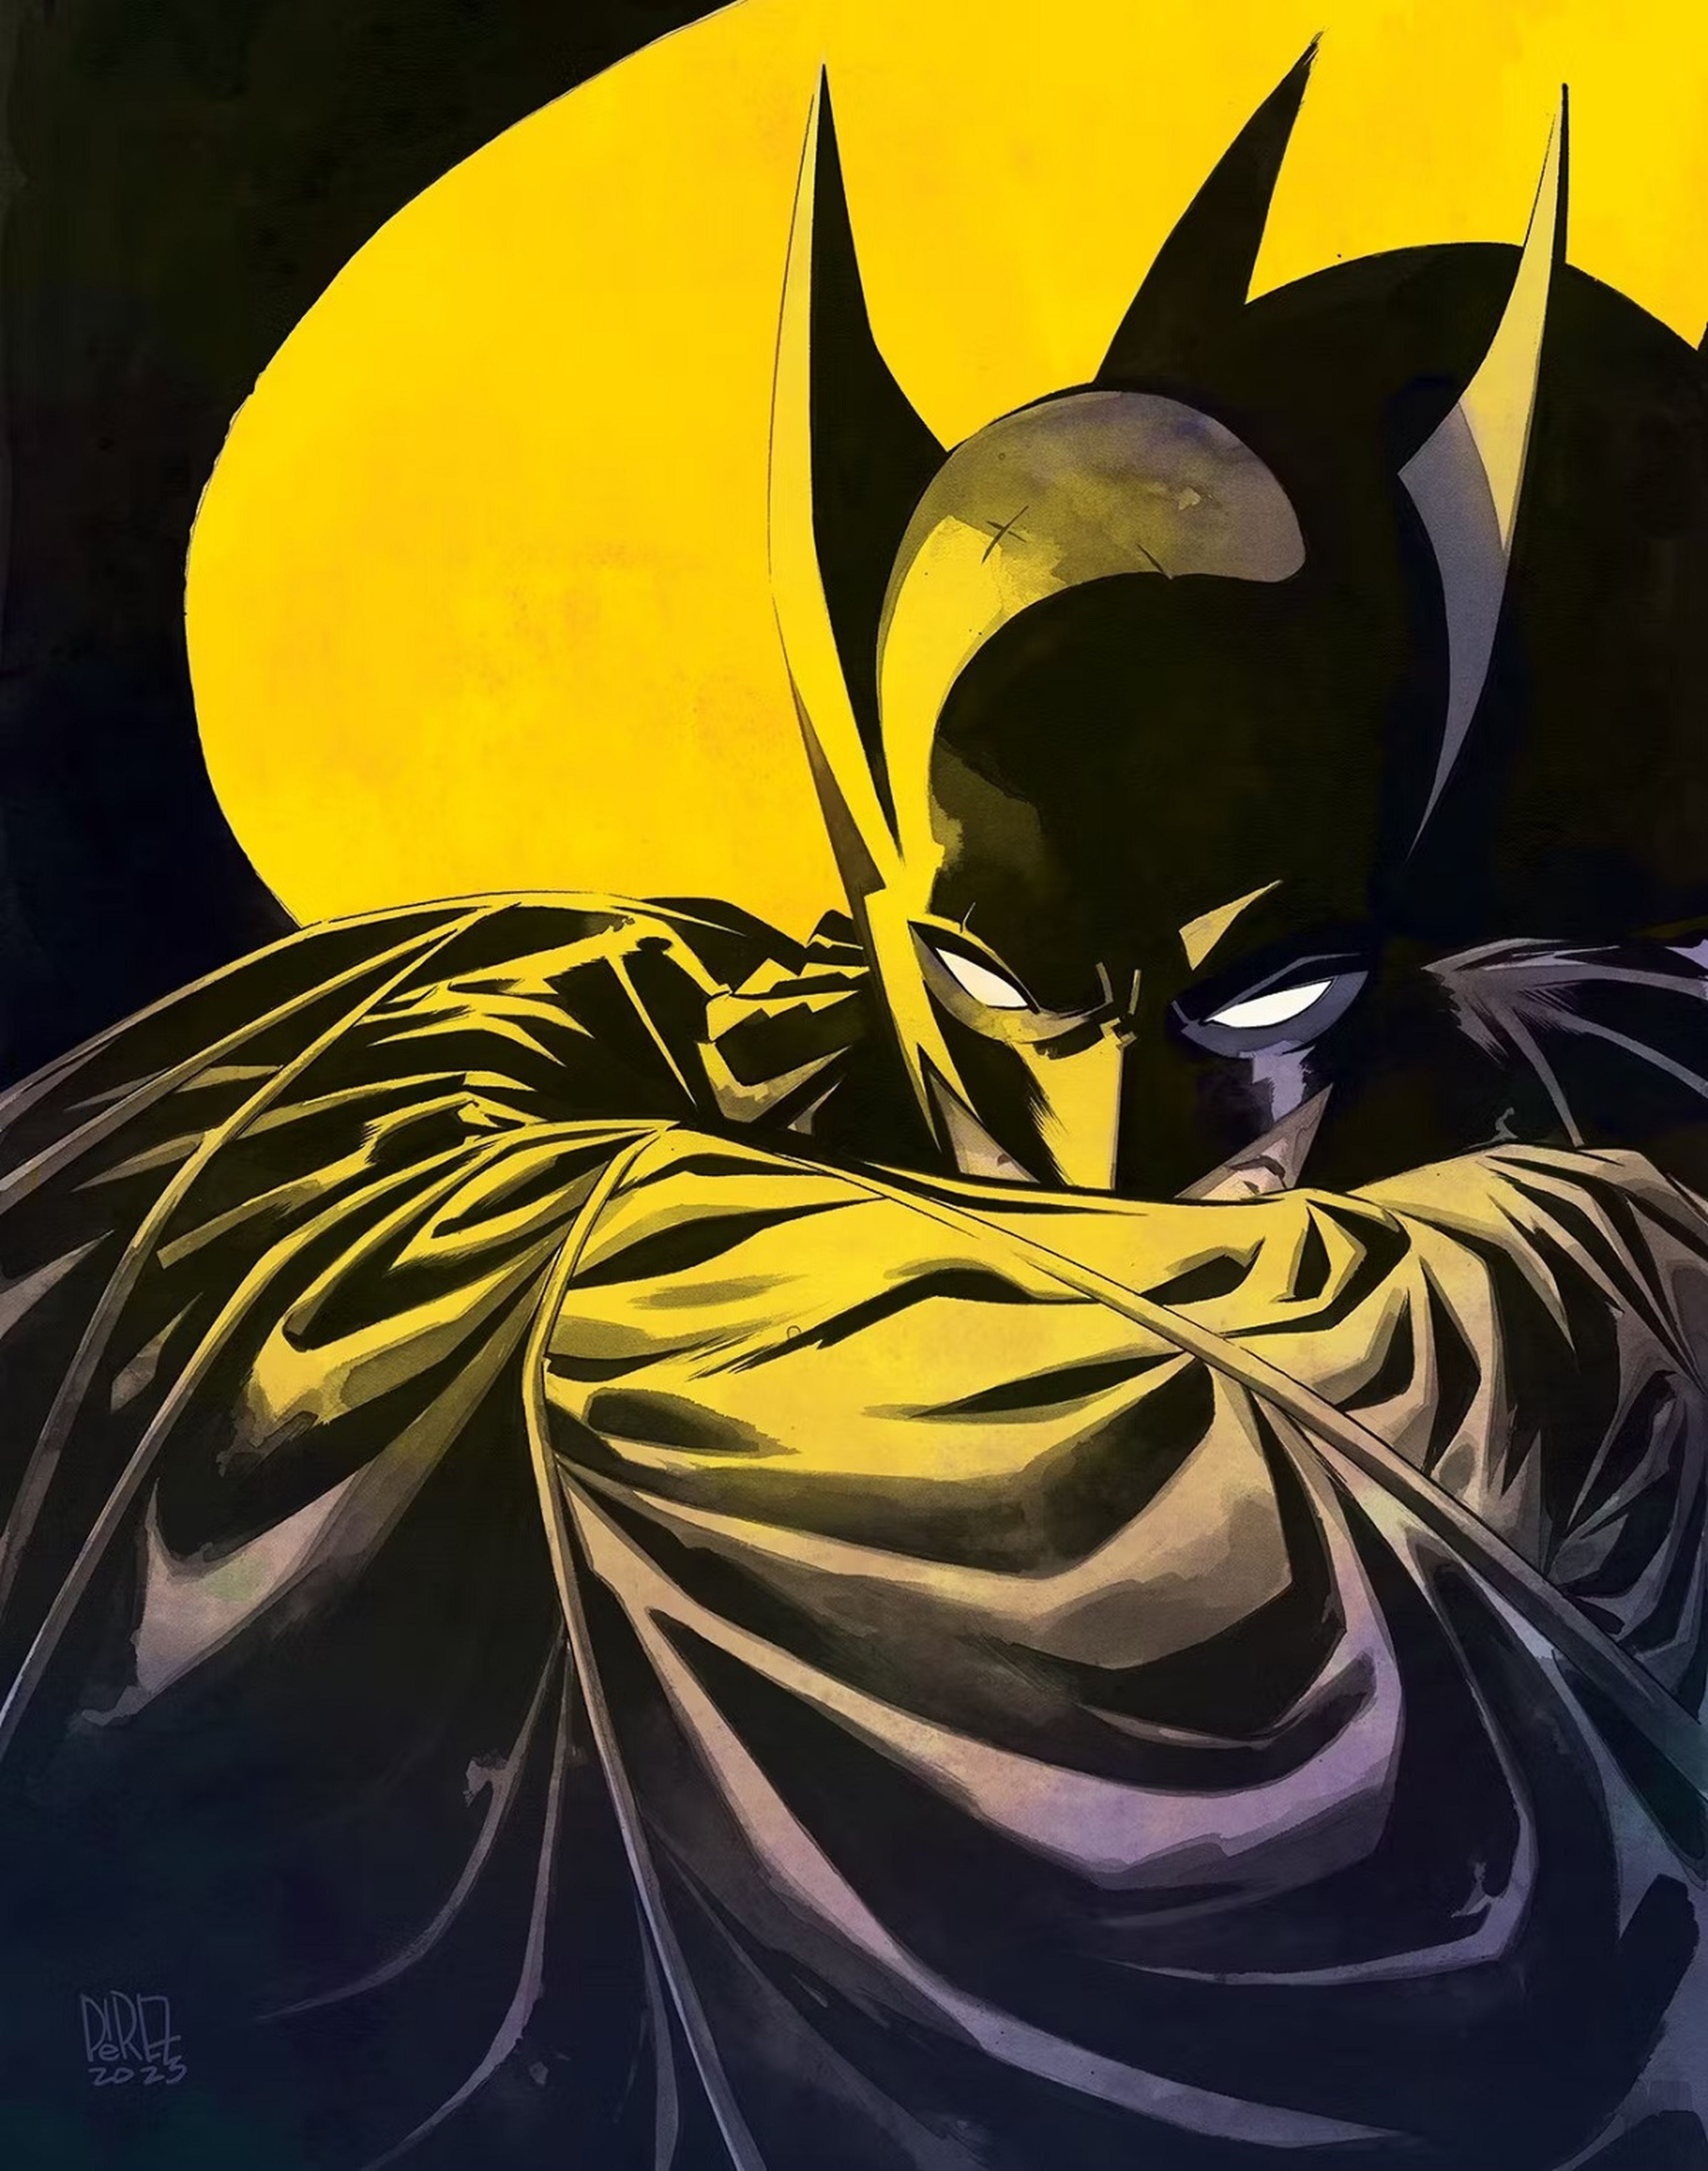 The Bat-Man: First Knight